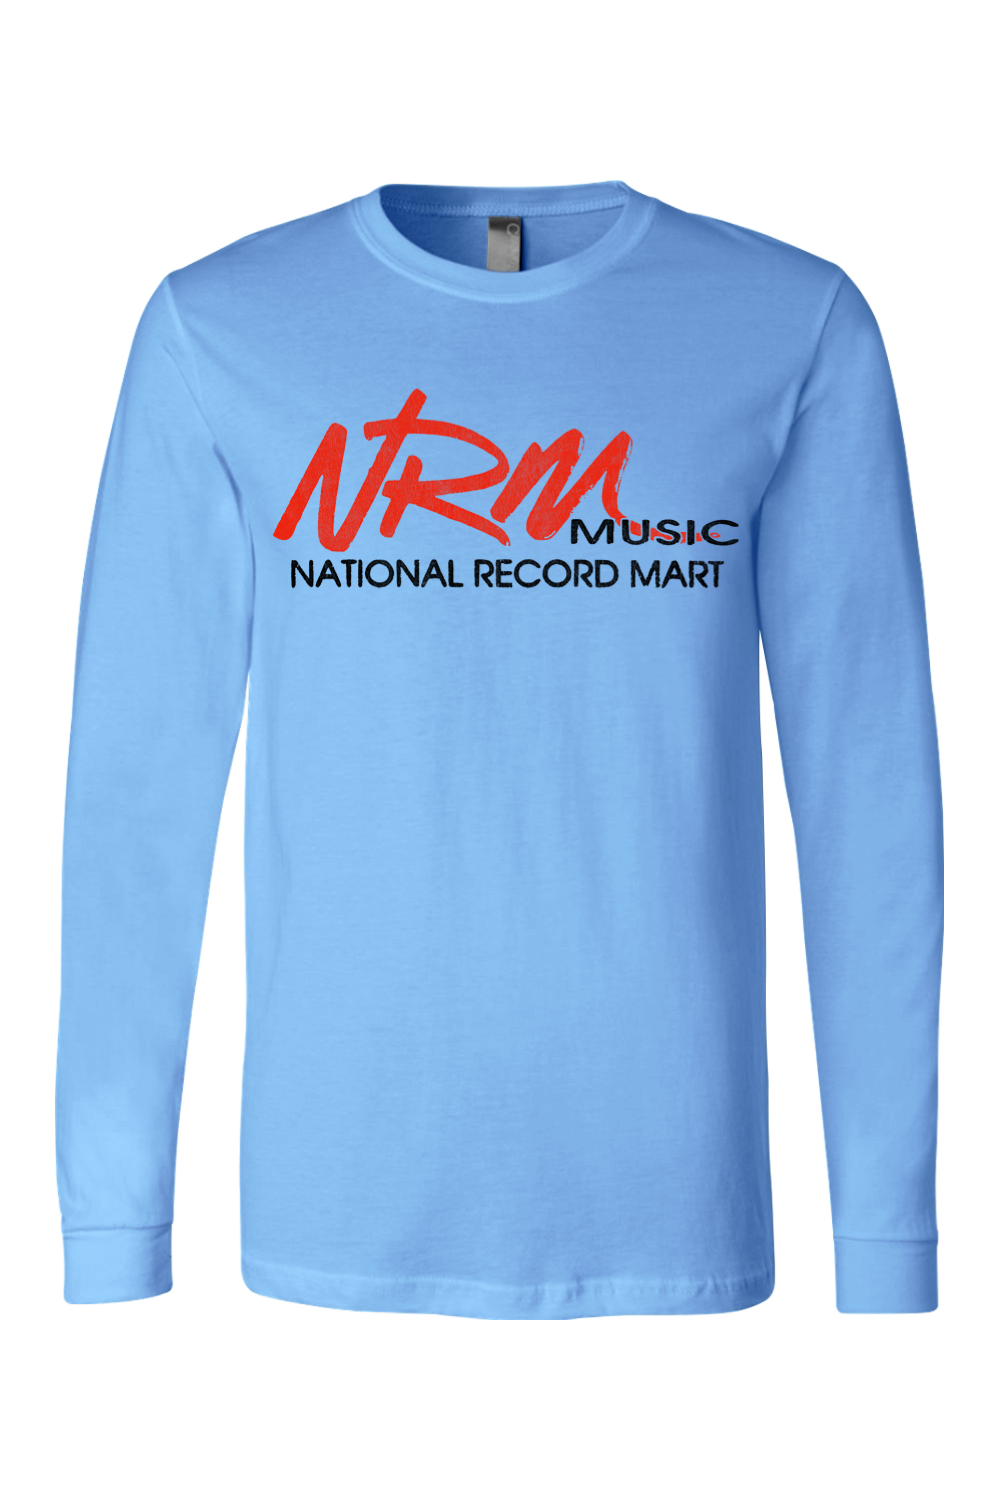 NRM - National Record Mart - Long Sleeve Tee - Yinzylvania